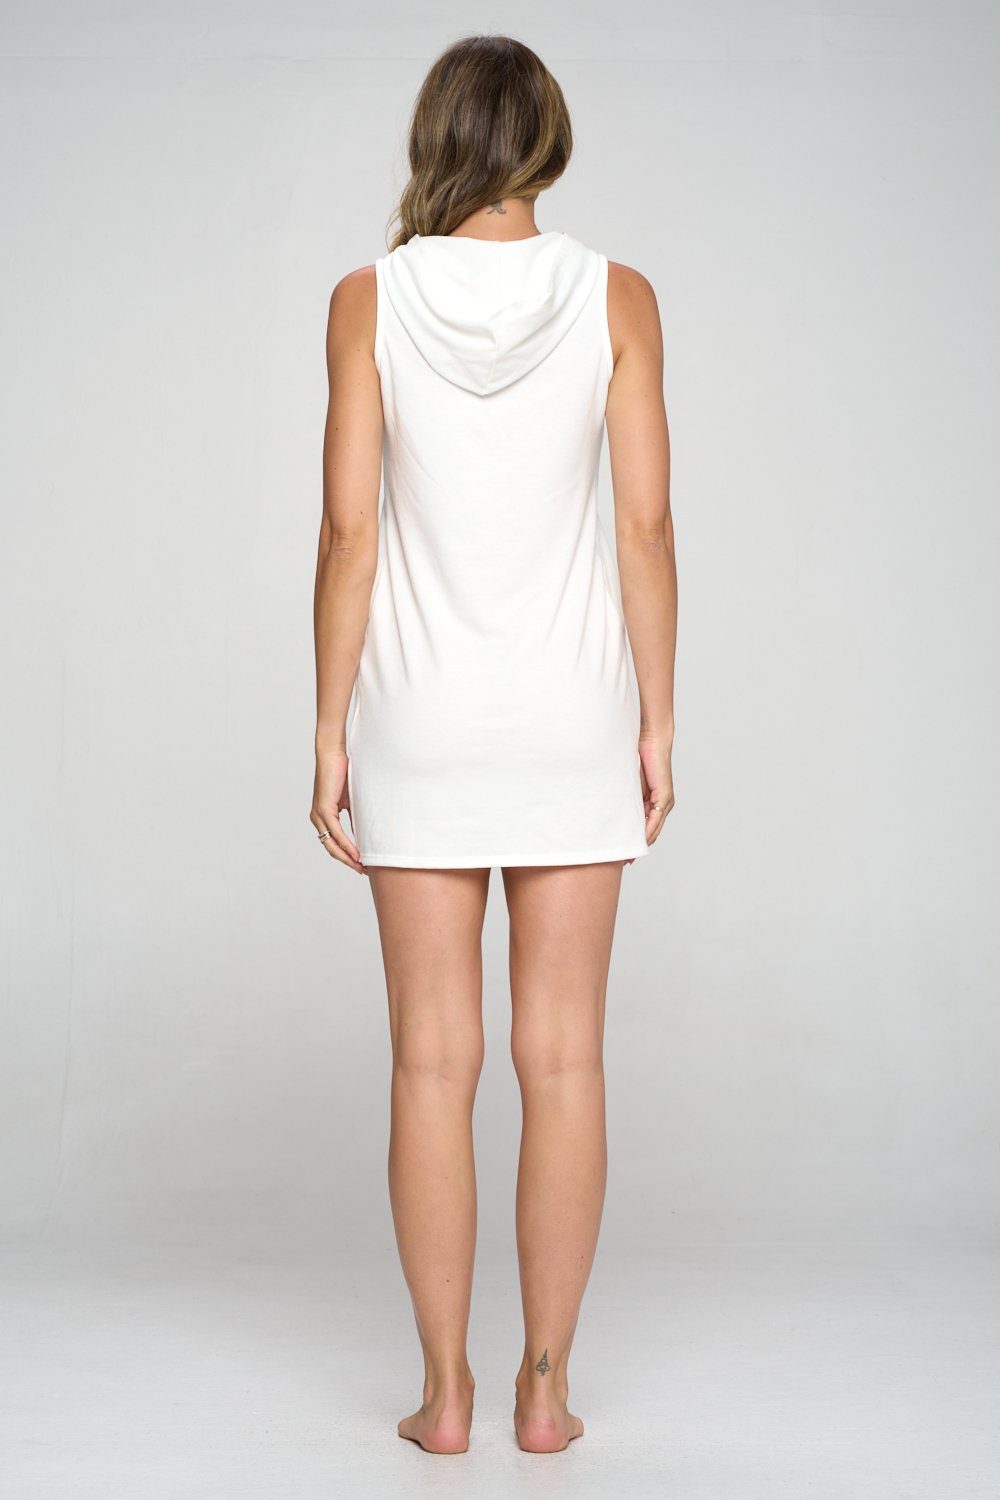 Athena - Ivory Tank Dress w Hood by EVCR